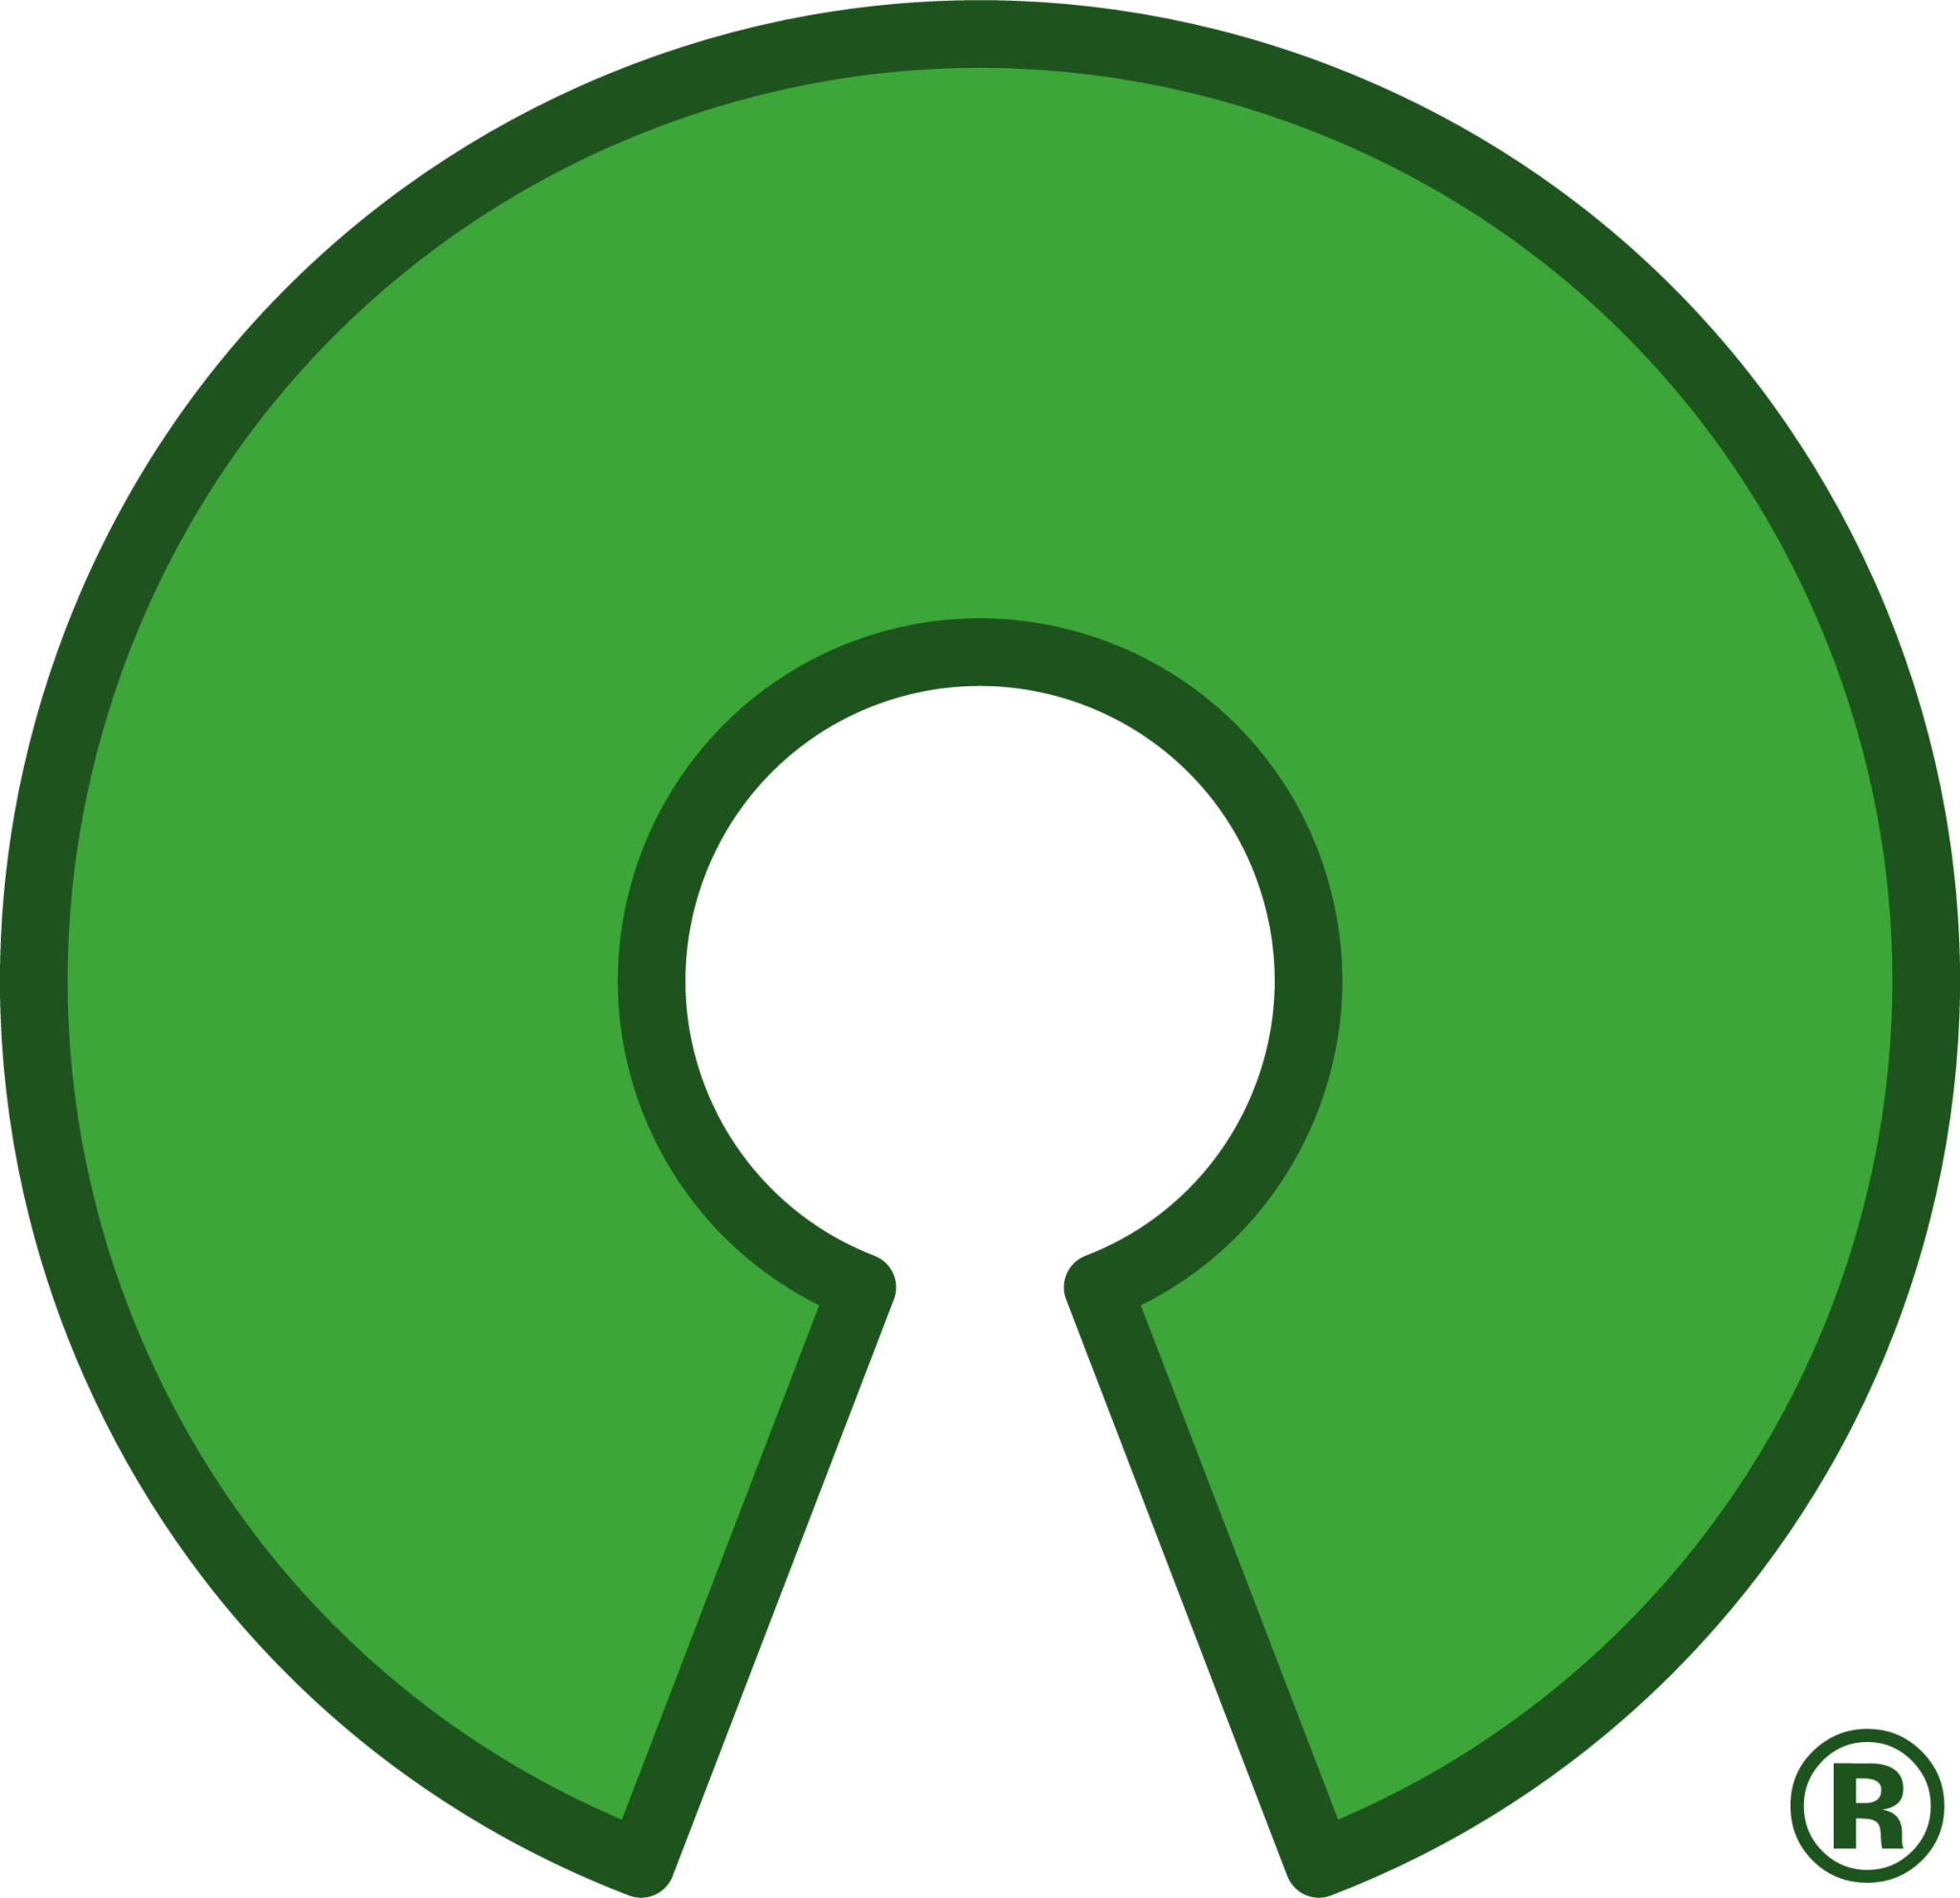 Open Source Initiative icon